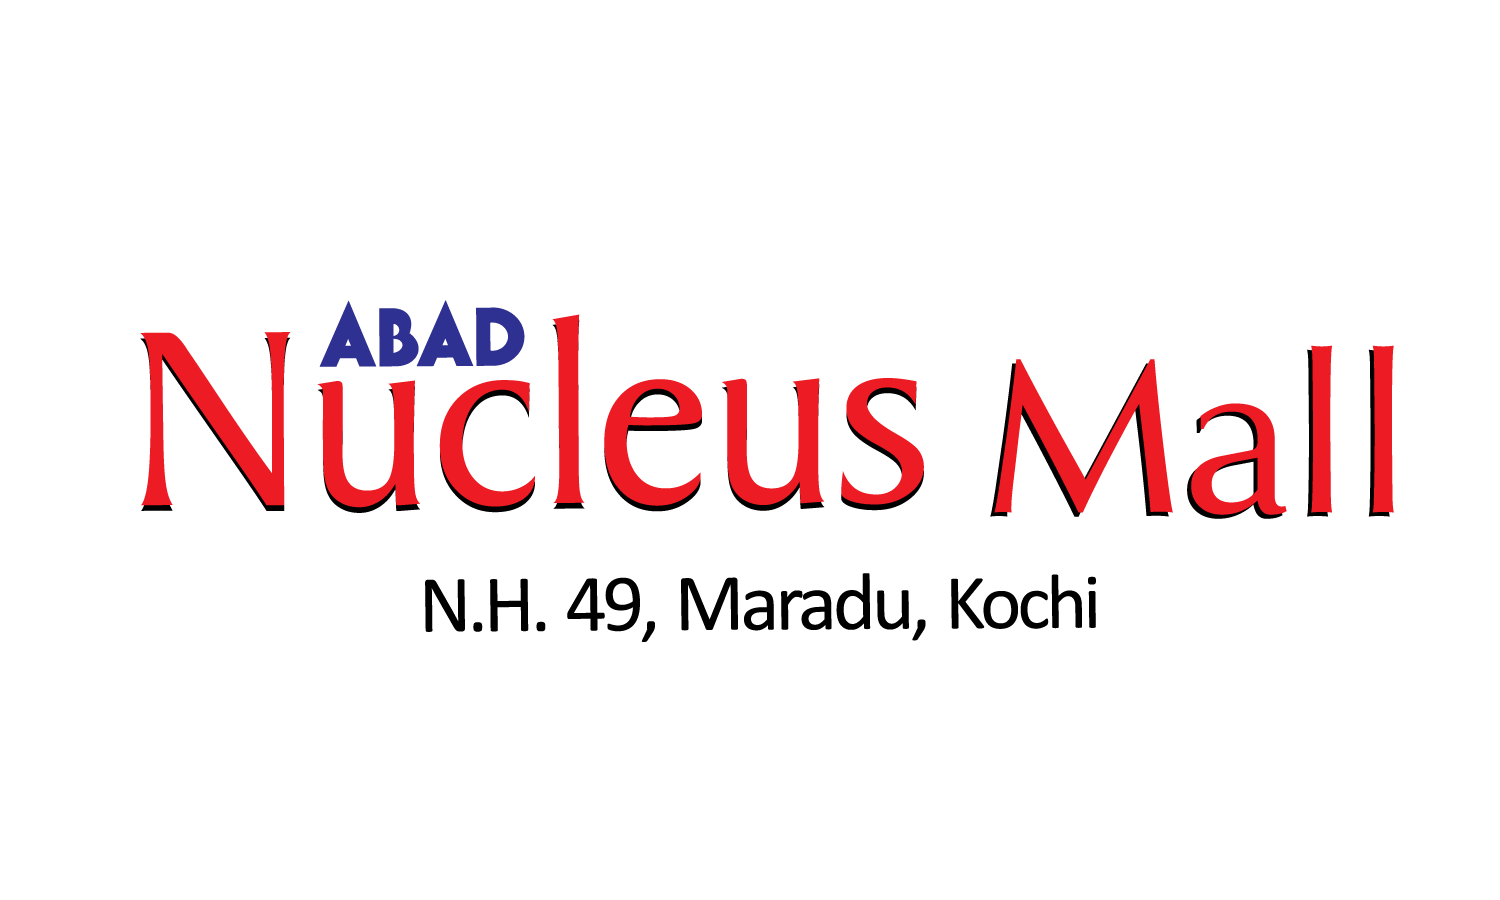 ABAD Nucleus Mall - Logo